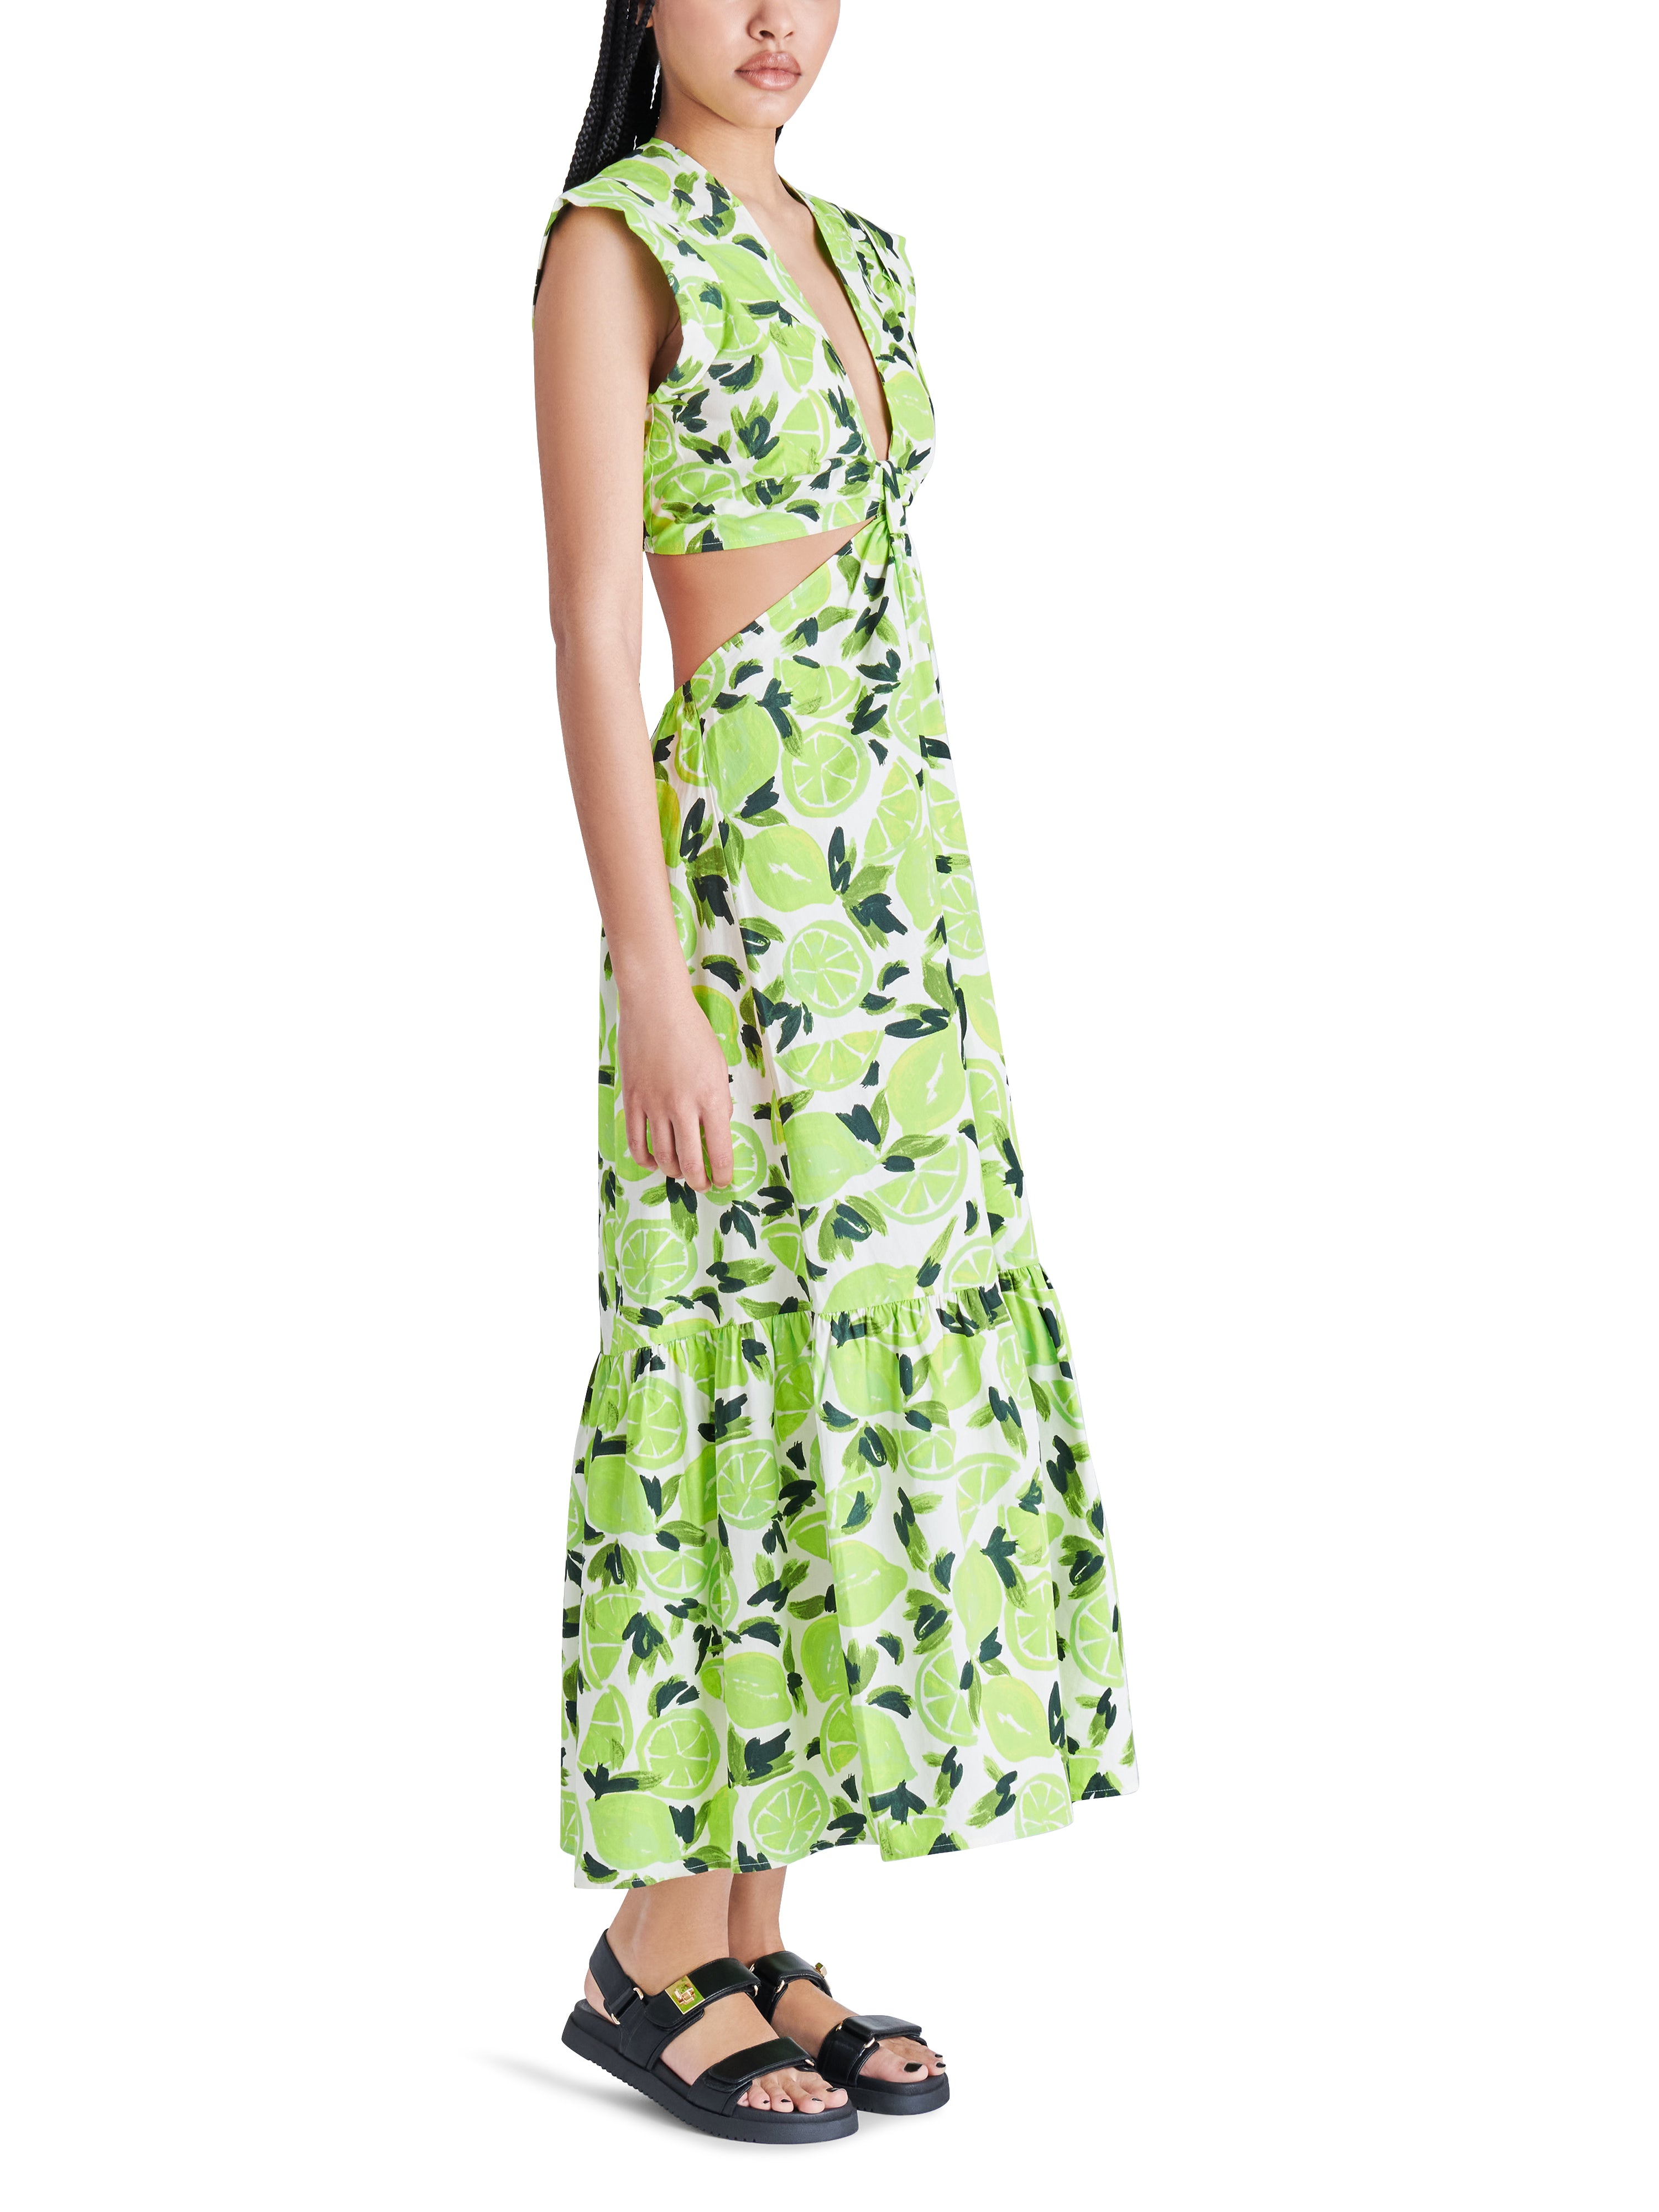 Amanda Midi Dress in Neon Green